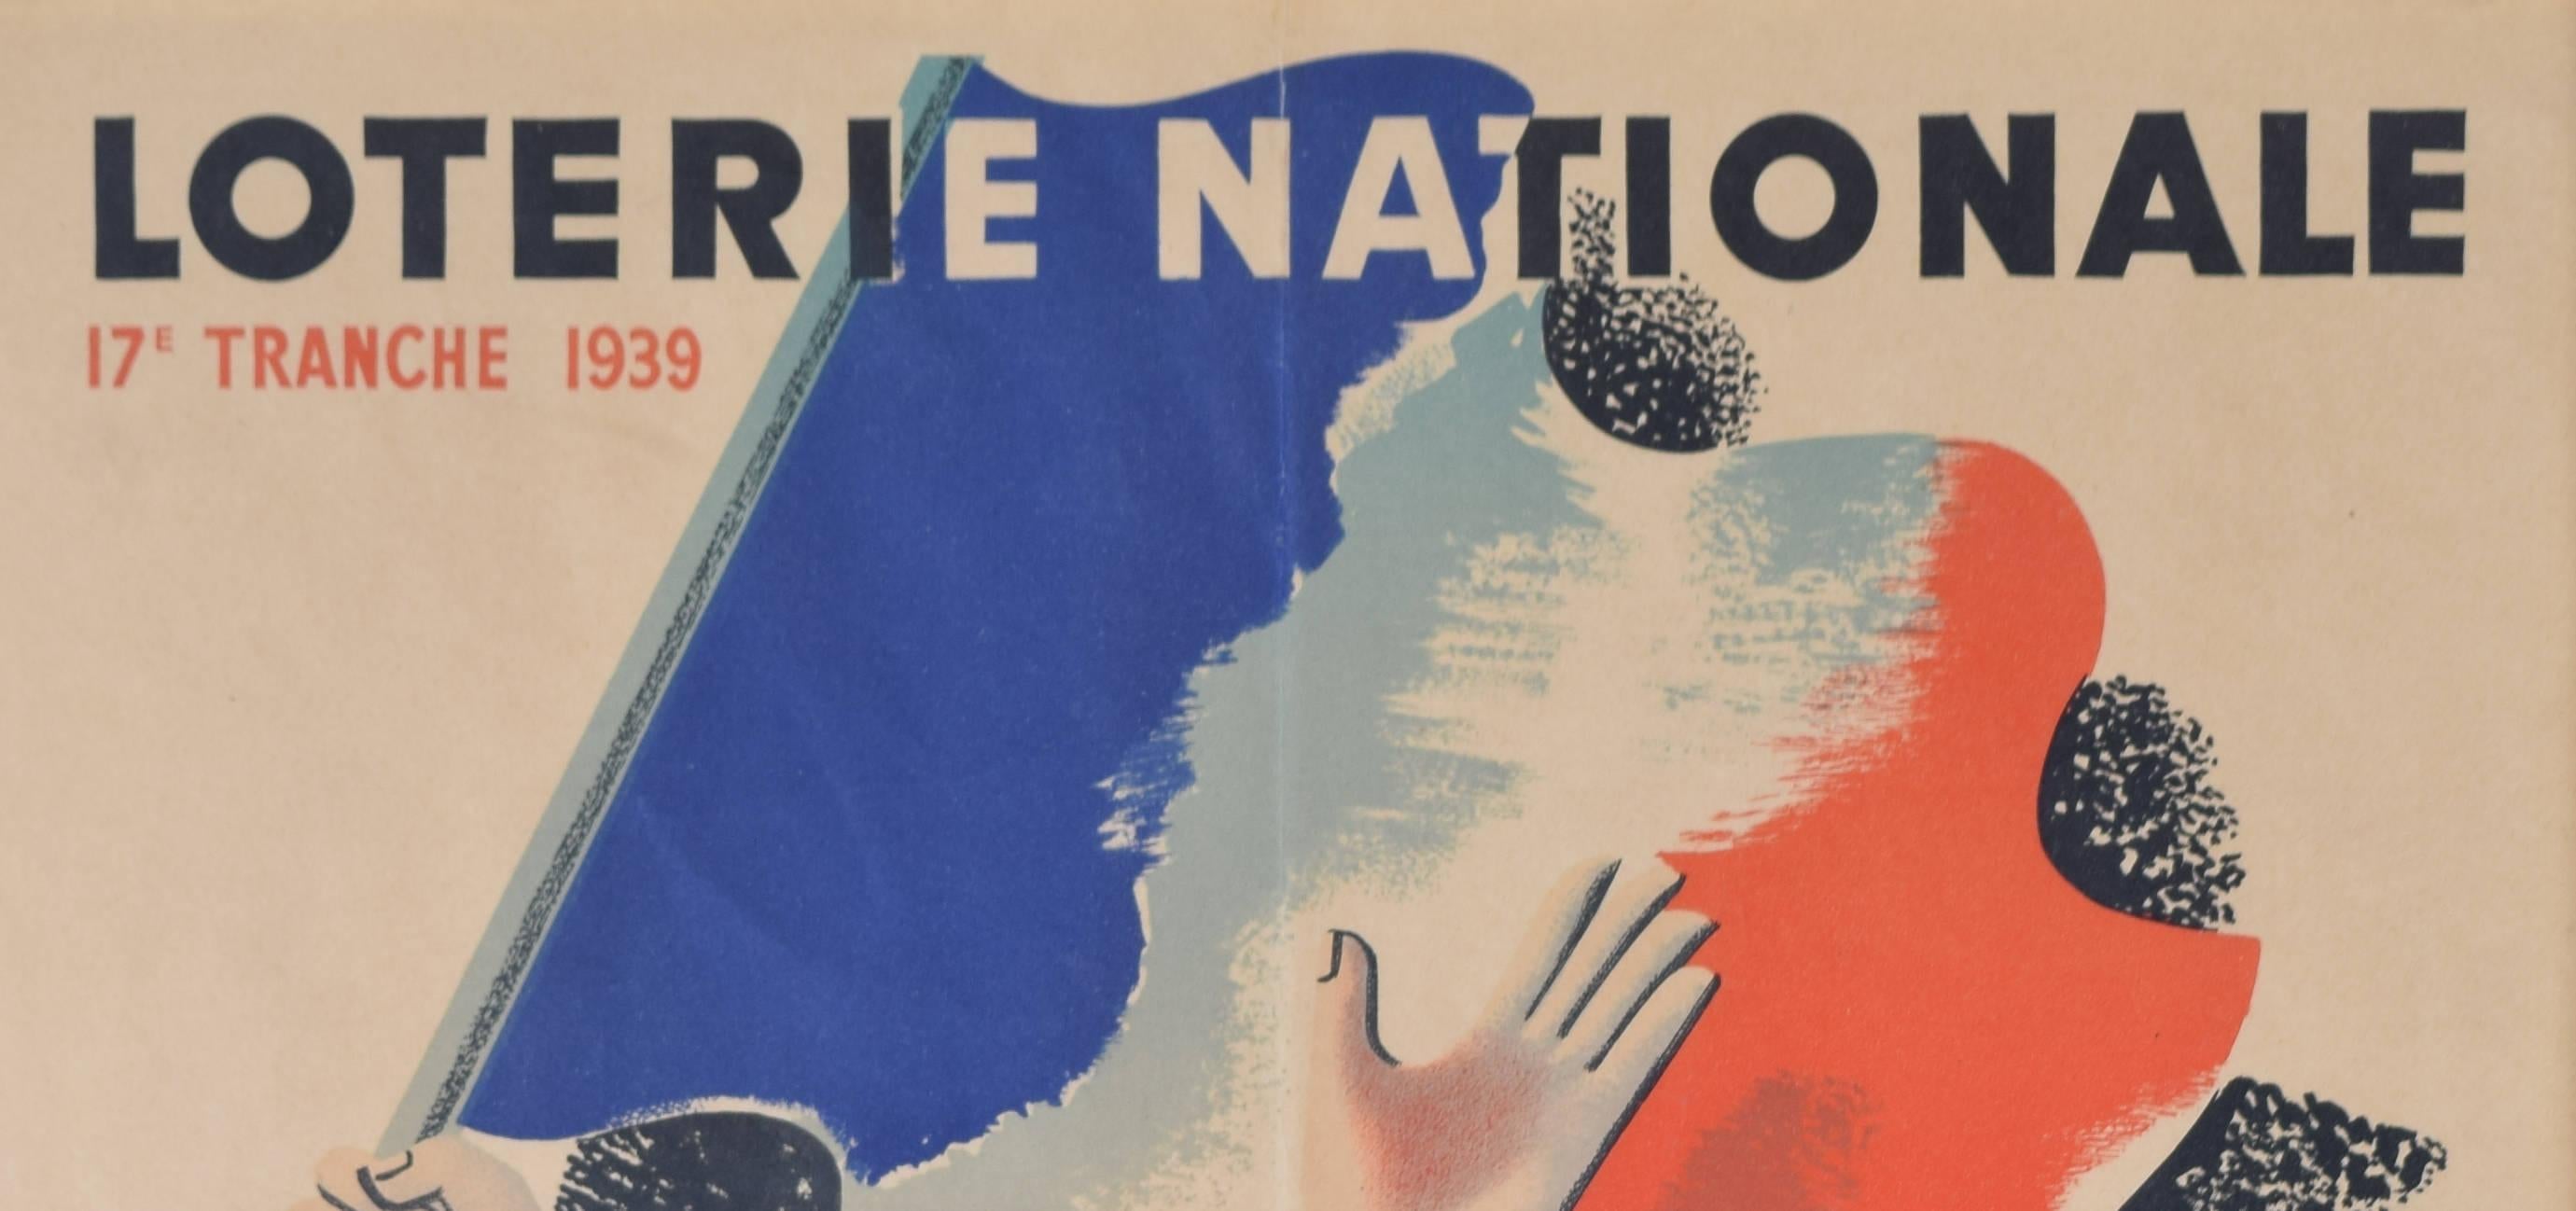 Loterie Nationale La Marseillaise original vintage poster by Edgard Derouet For Sale 1